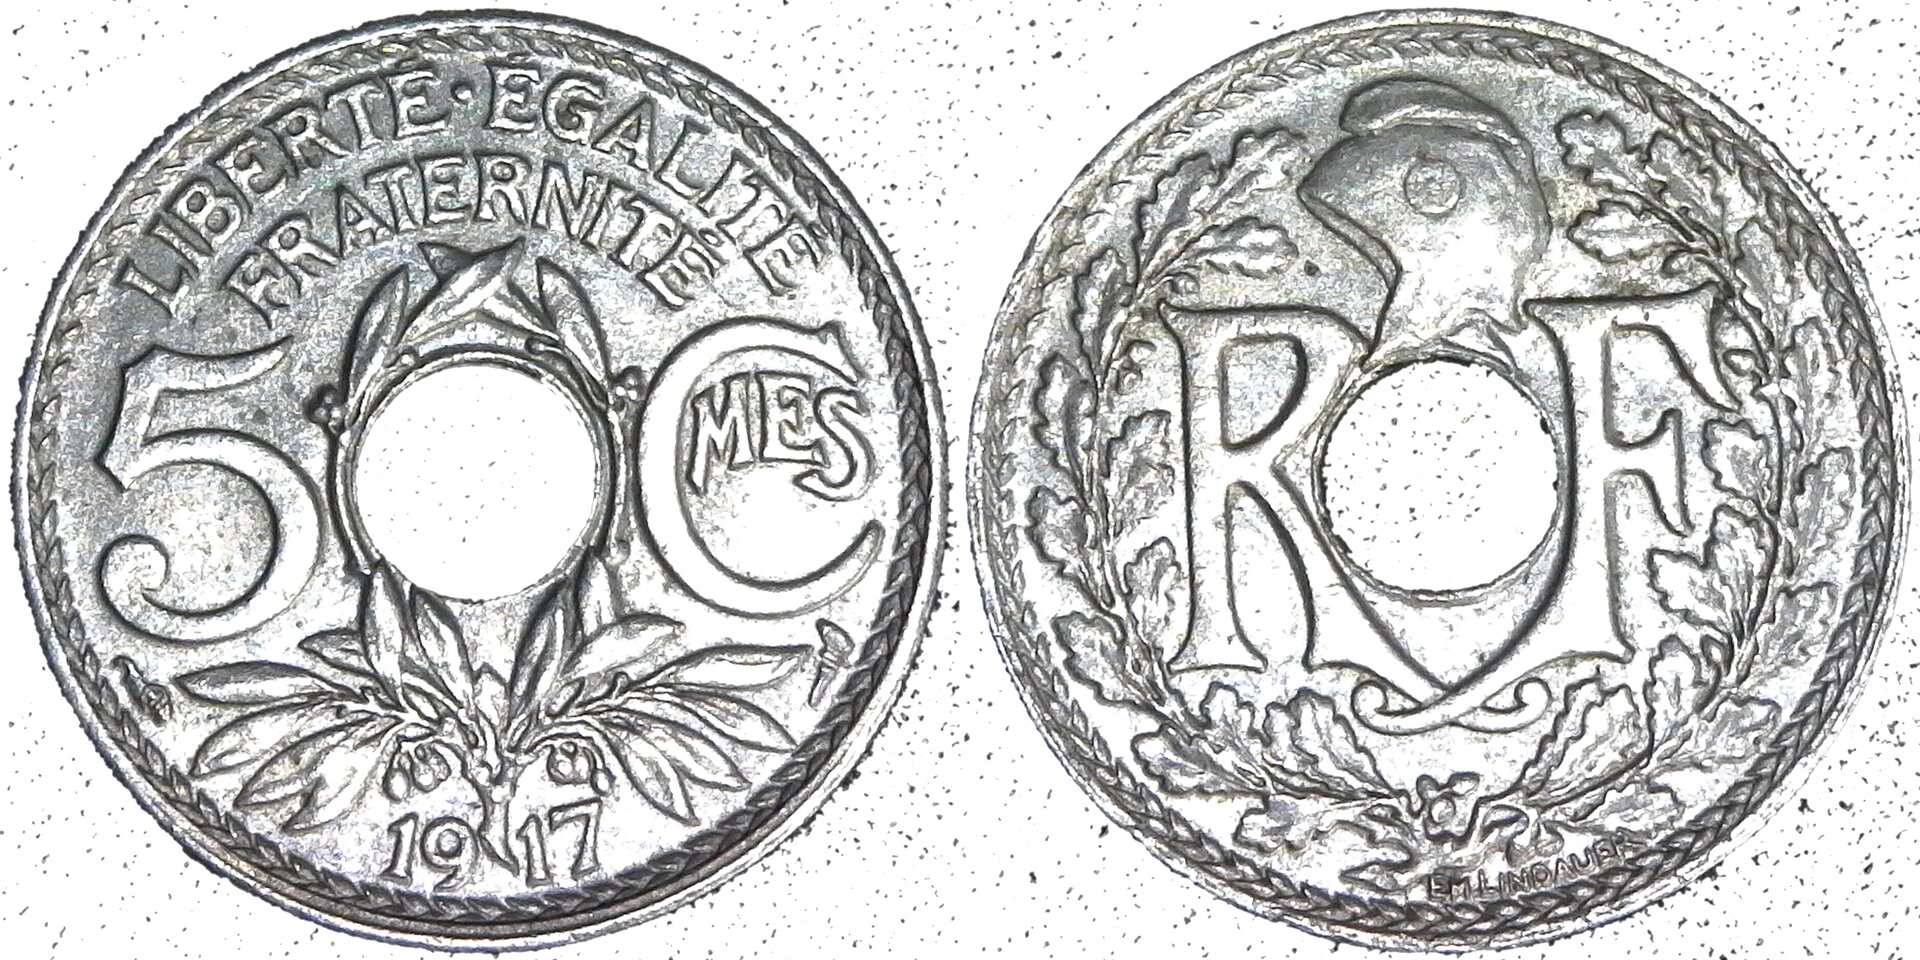 France 5 Centimes 1917 obv-side-cutout.jpg